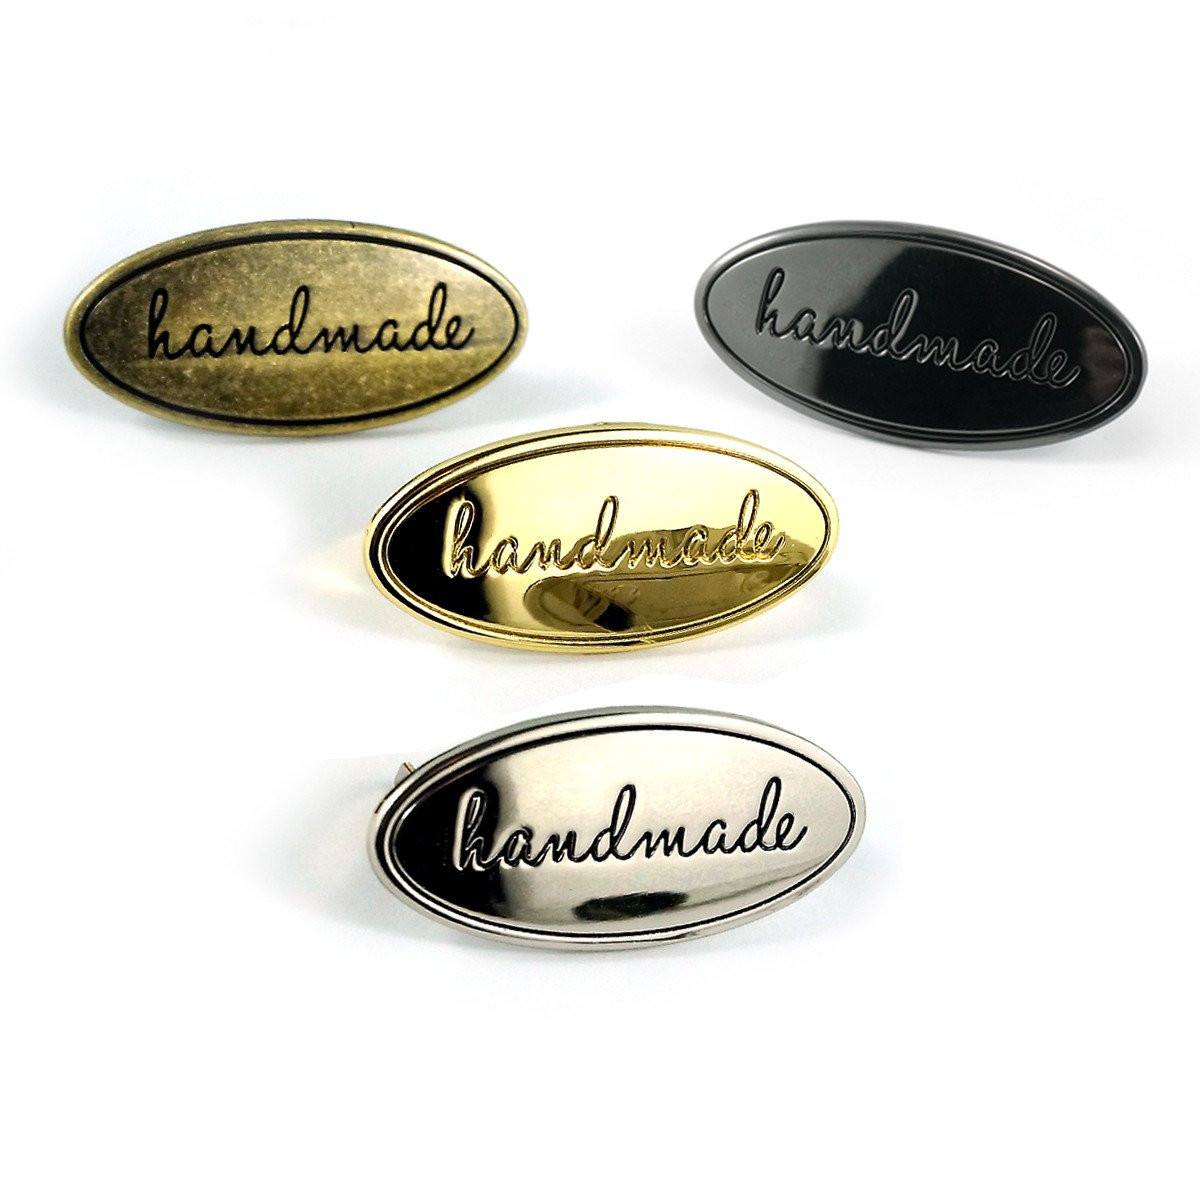 Metal Oval Bag Label "Handmade" image # 44280